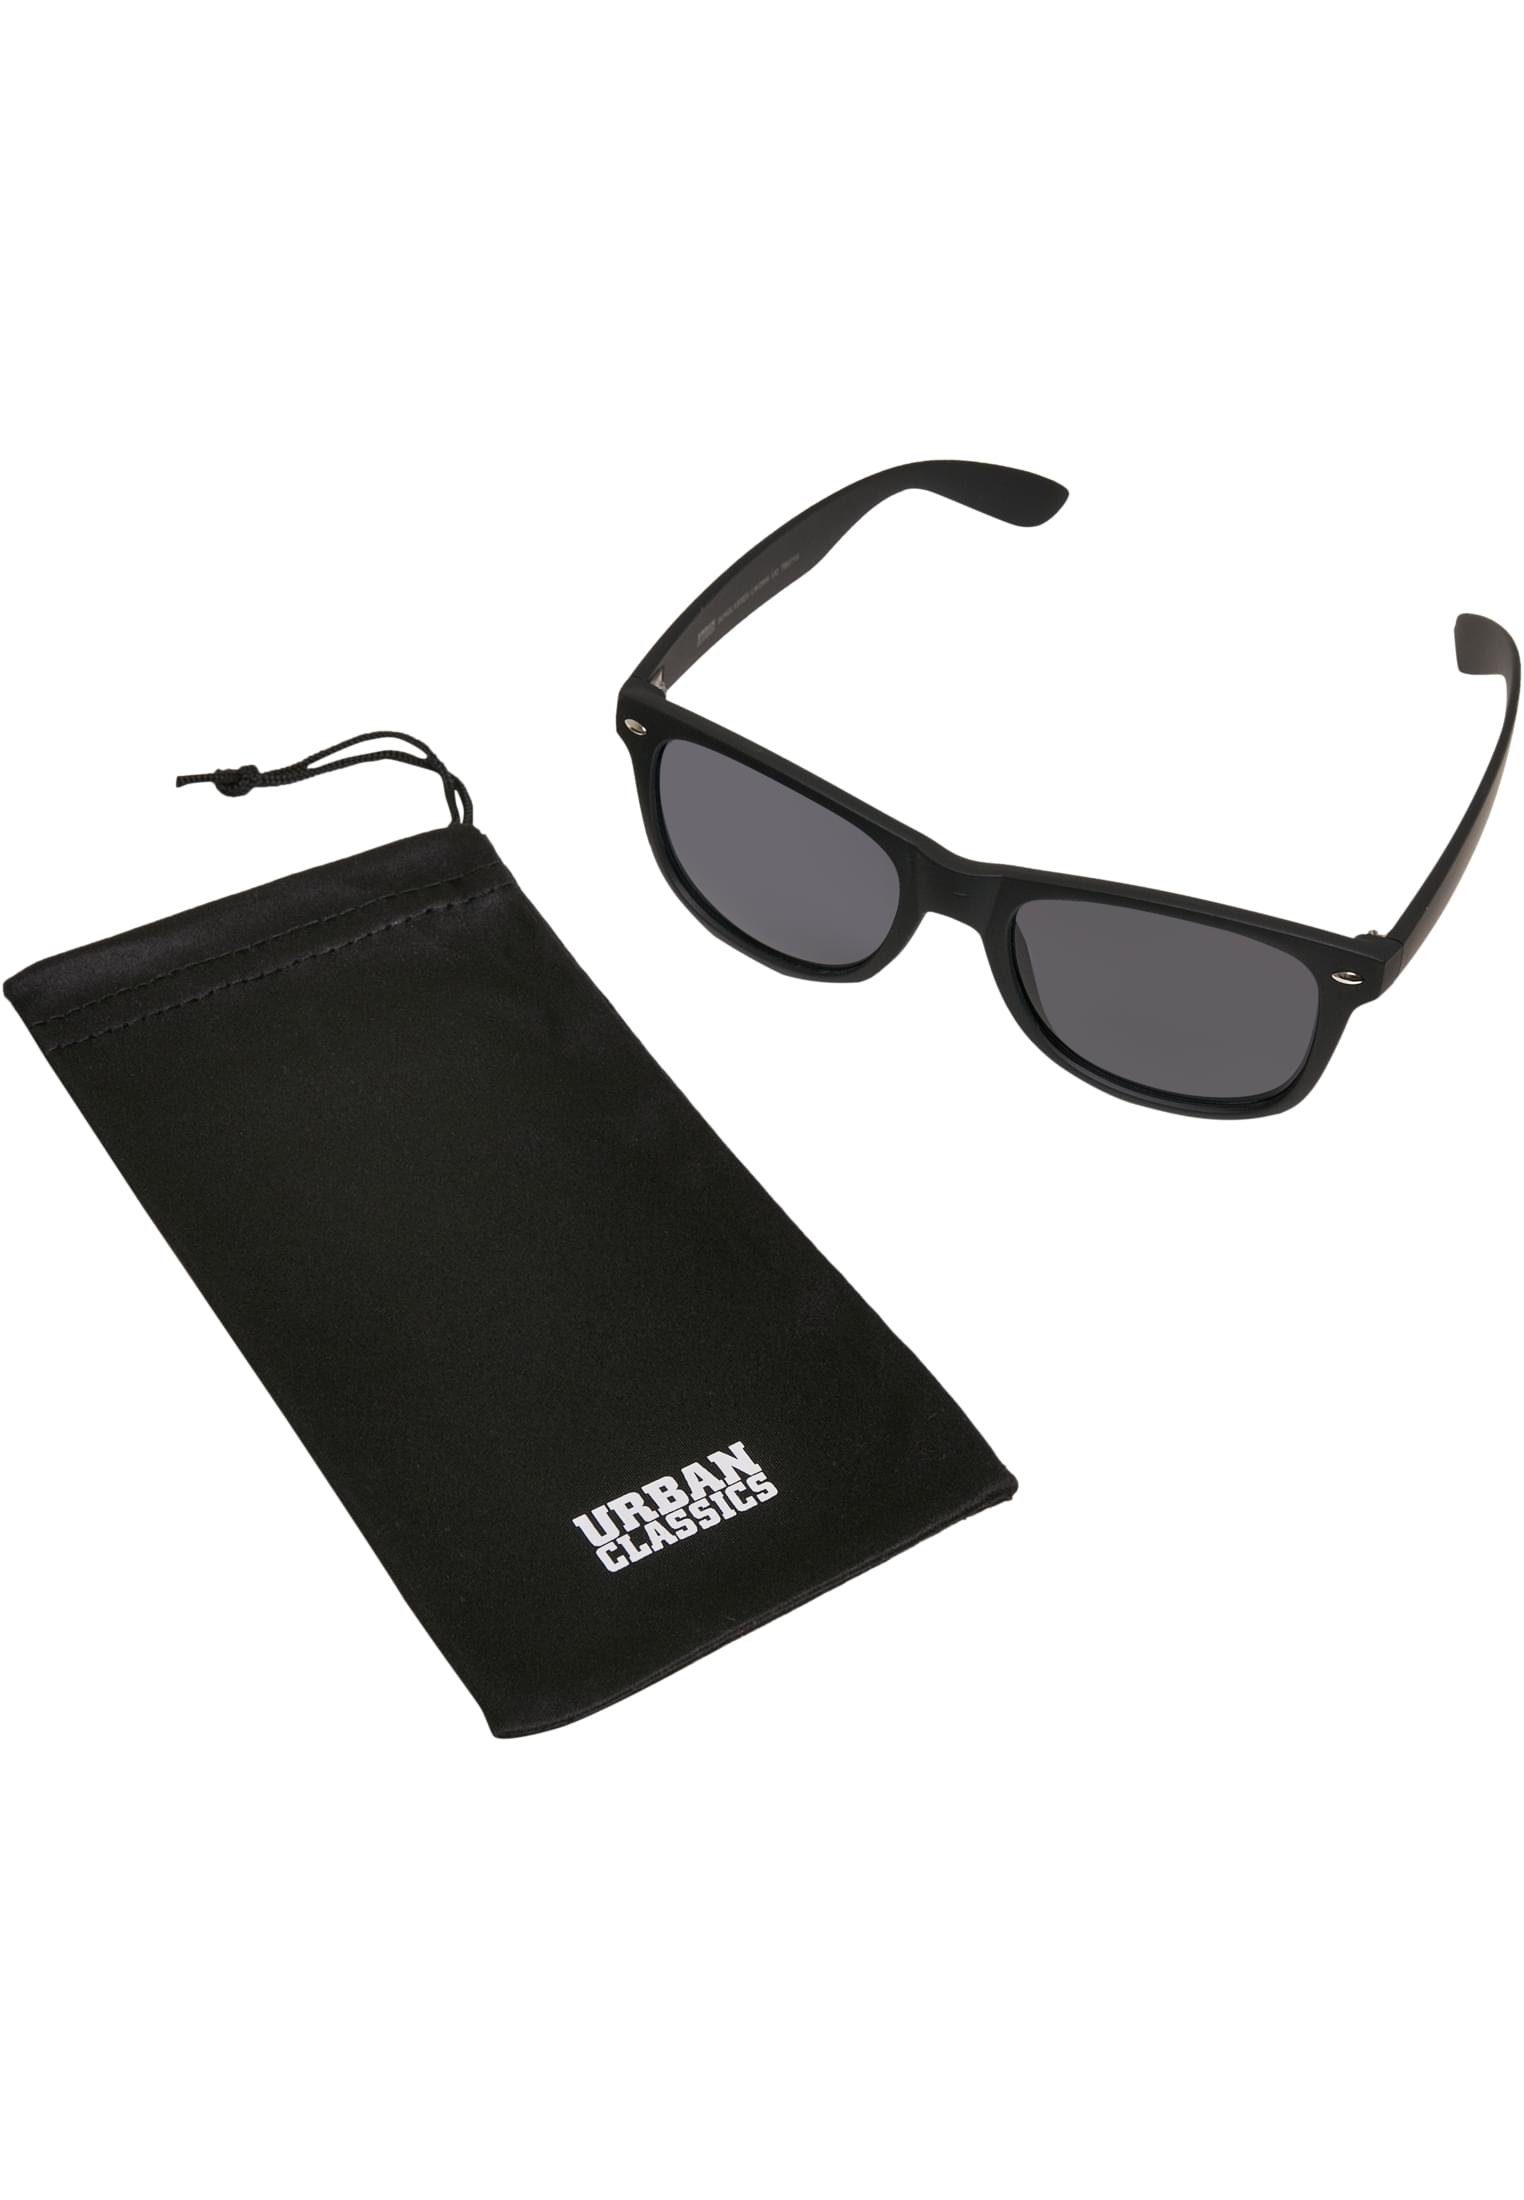 Sonnenbrille URBAN Likoma UC CLASSICS Sunglasses black Accessoires